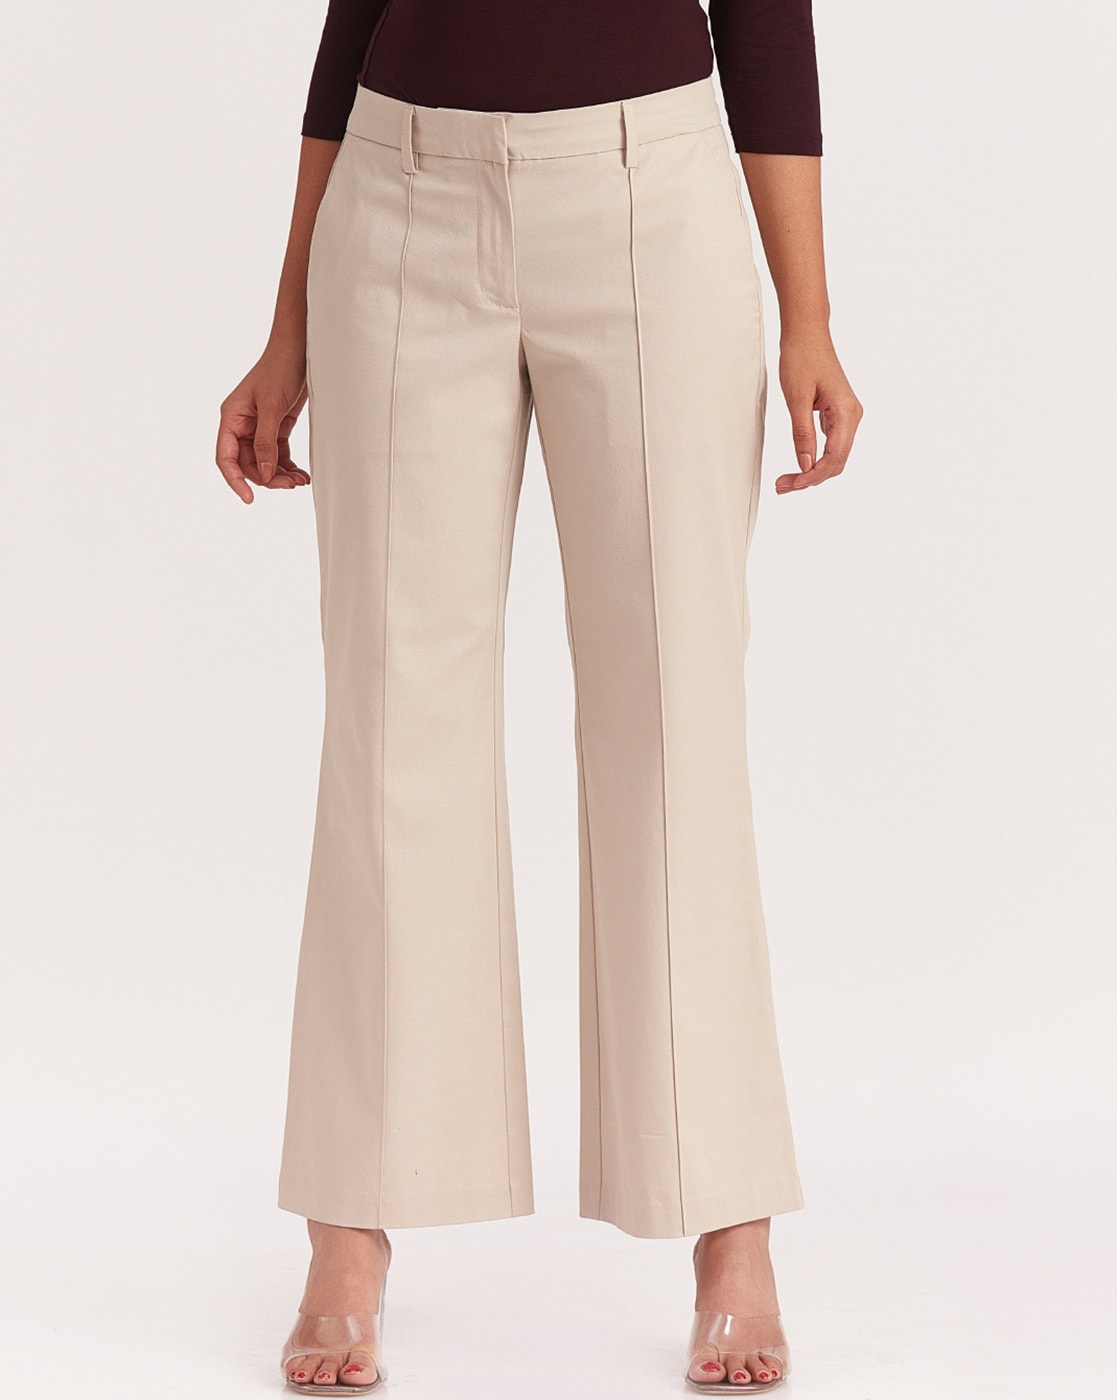 Women crinkle linen shirt and pants set wholesale Cream color - wholesale  clothing